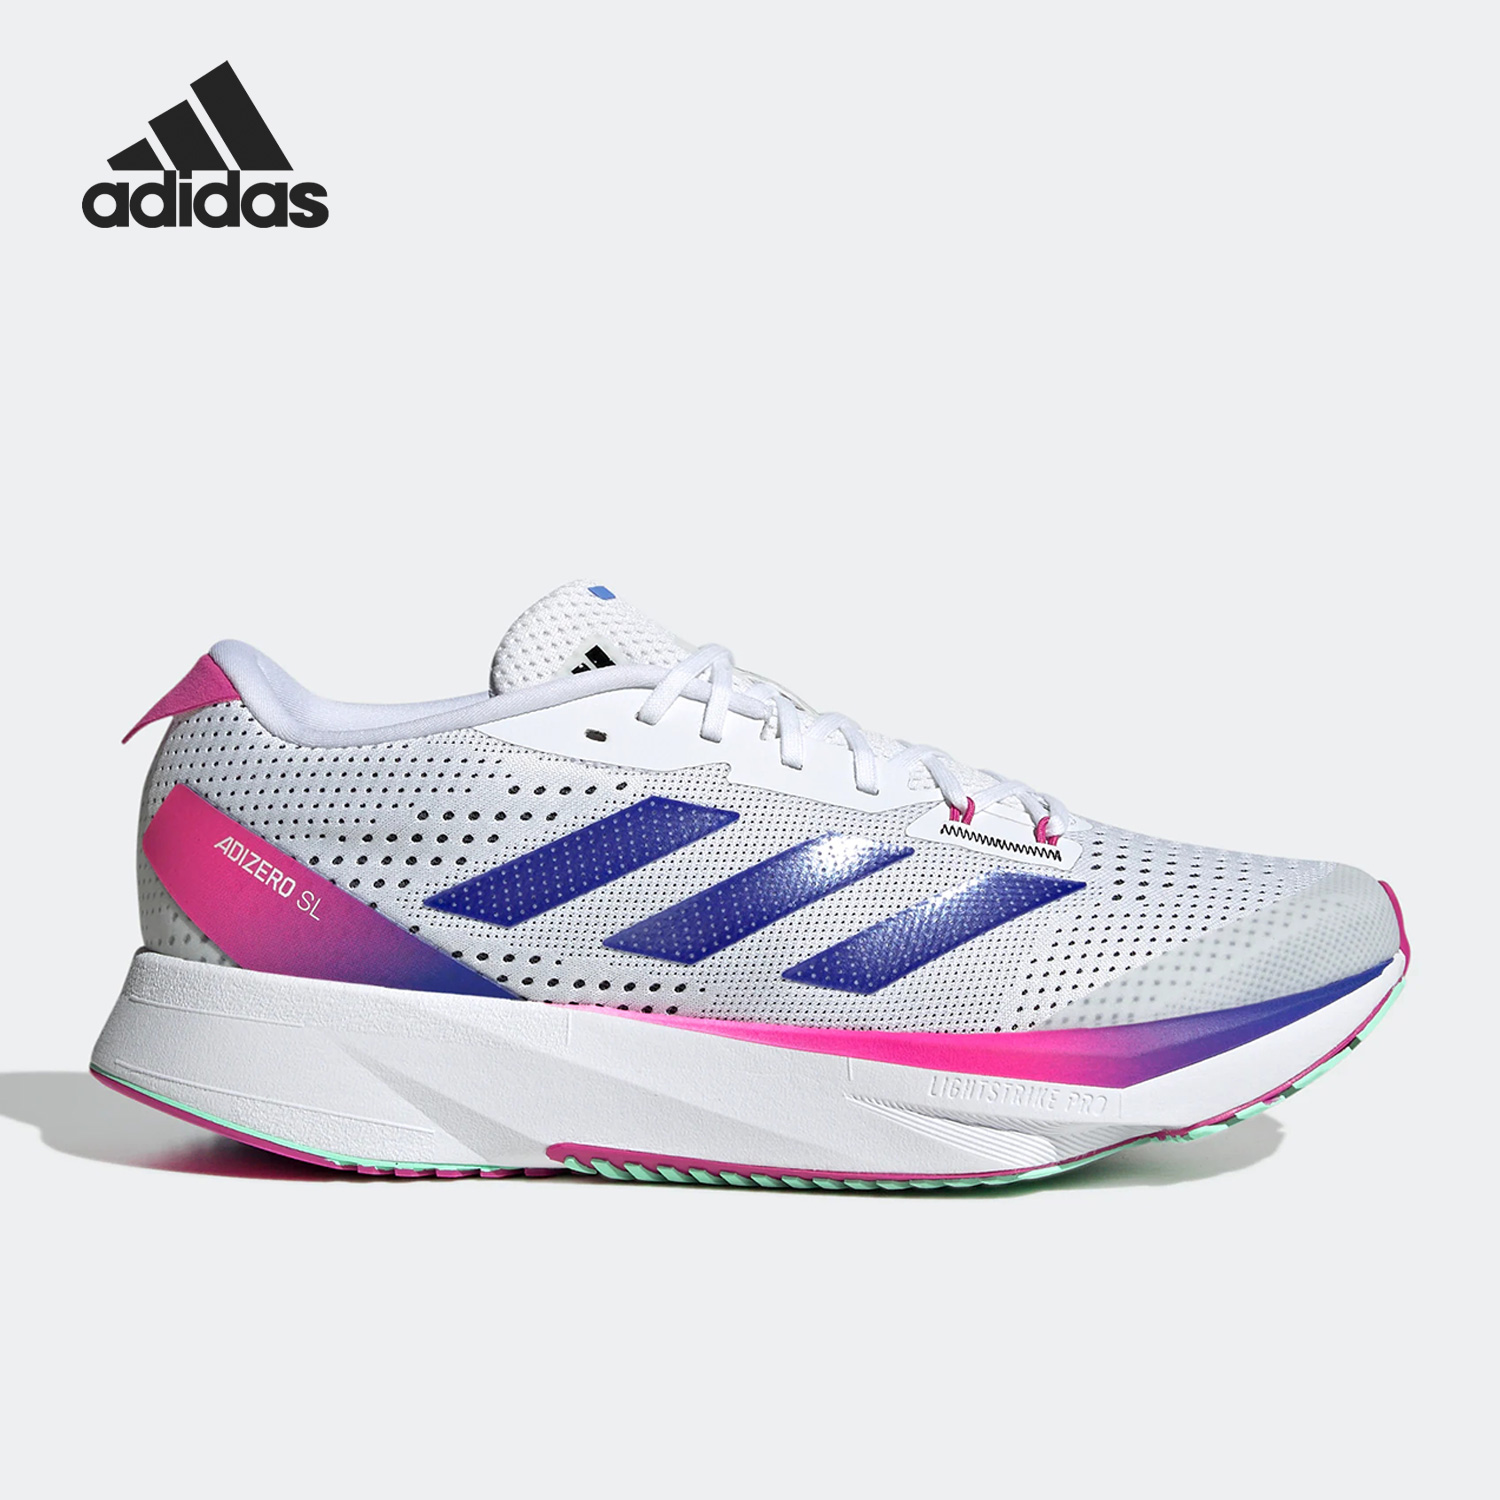 Adidas/阿迪达斯正品新款Adizero SL男女缓震运动跑步鞋GV9095 运动鞋new 跑步鞋 原图主图